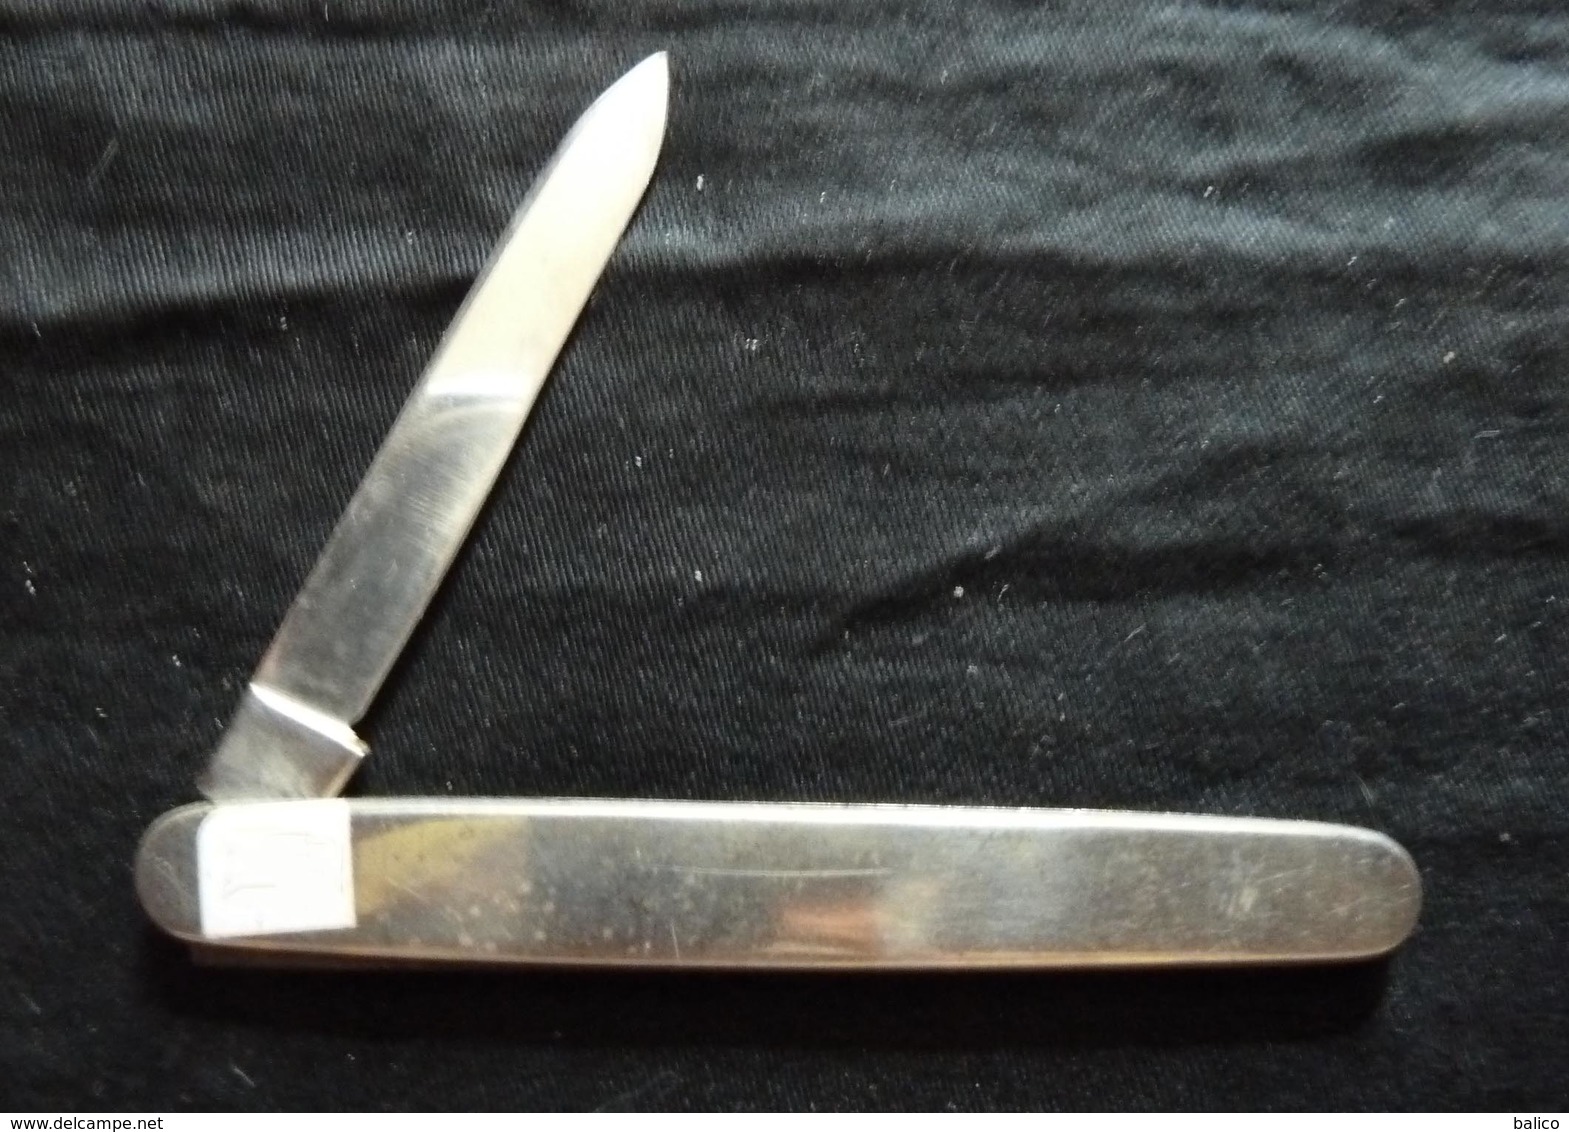 Couteau De Poche - Stainless  FRUIT KNIFF - Une Lame - Knives